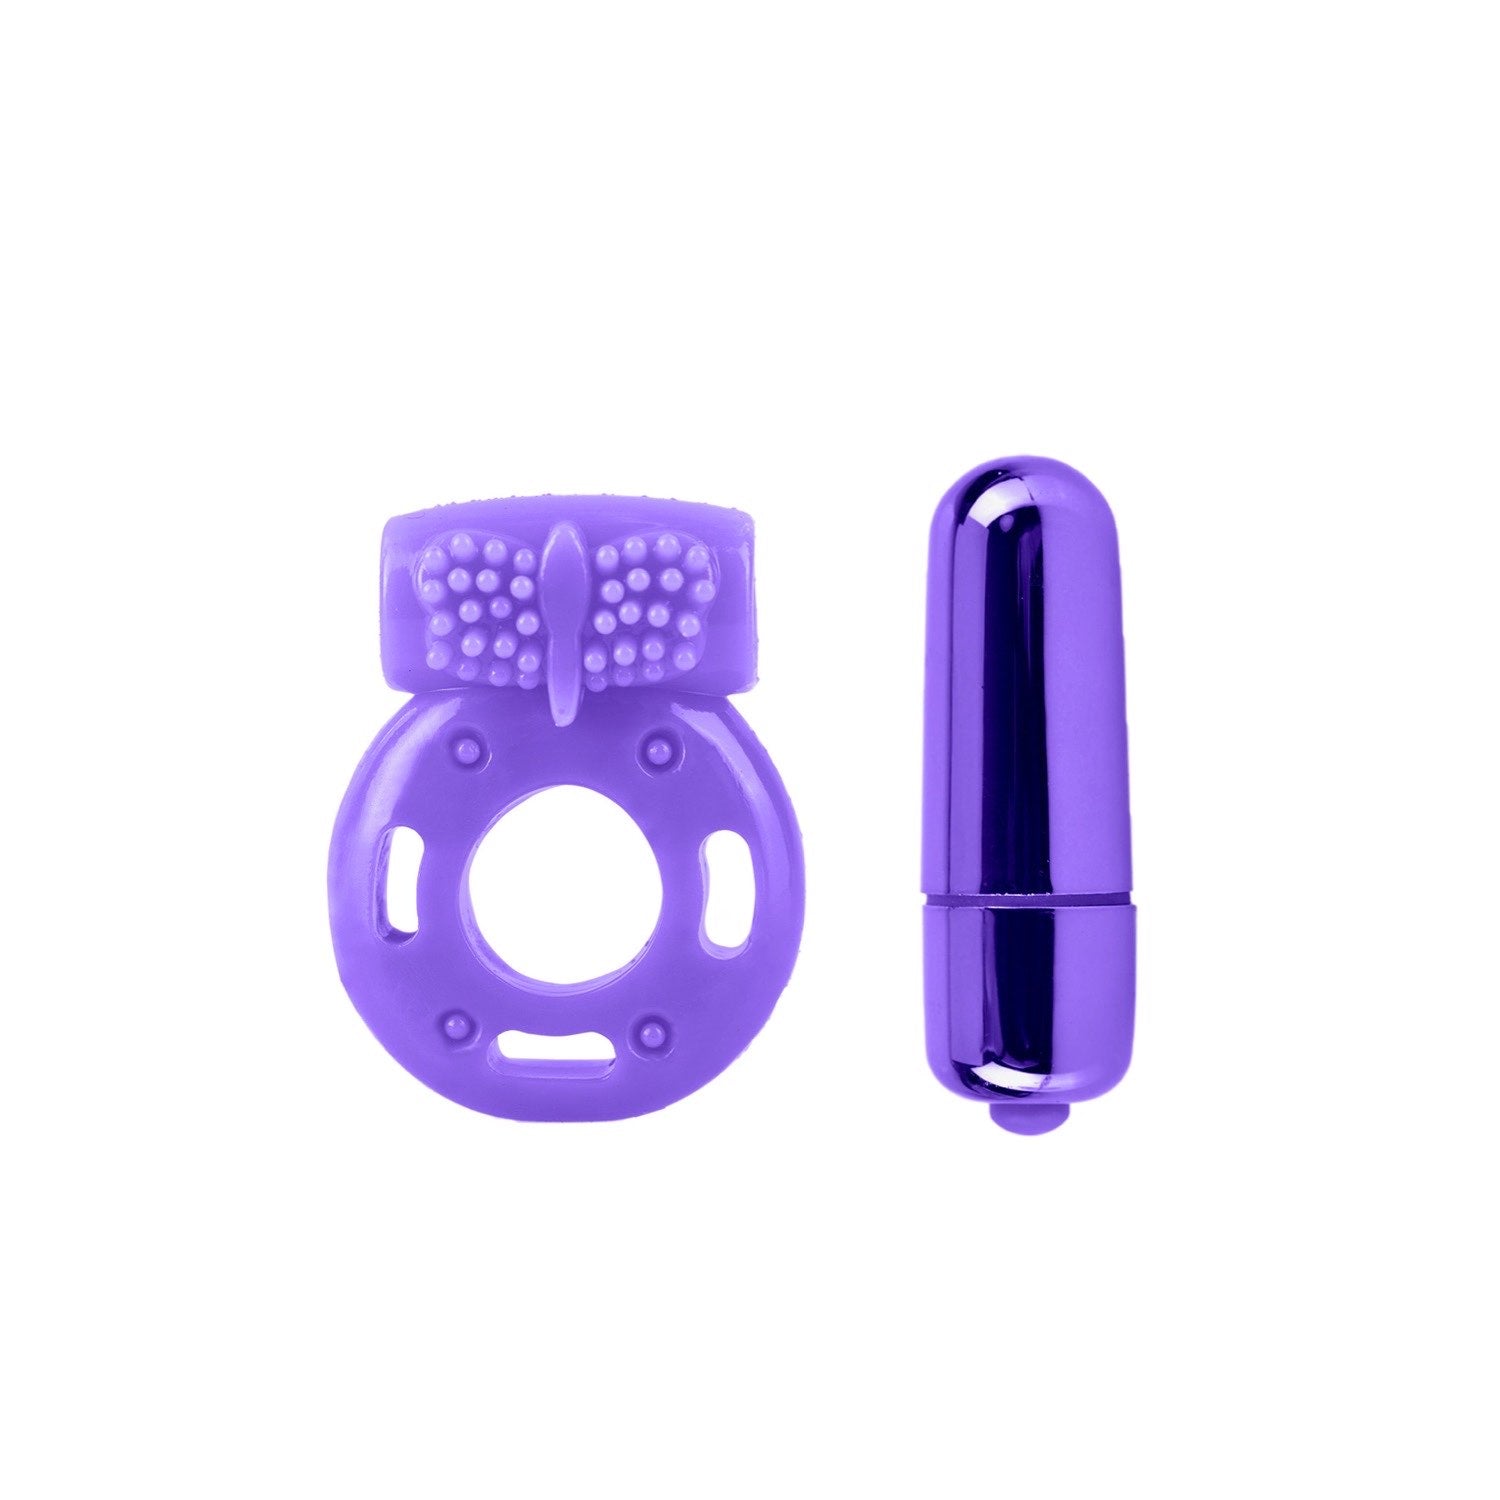  Neon Vibrating Couples Kit - Purple - Purple - 3 Piece Set by Pipedream